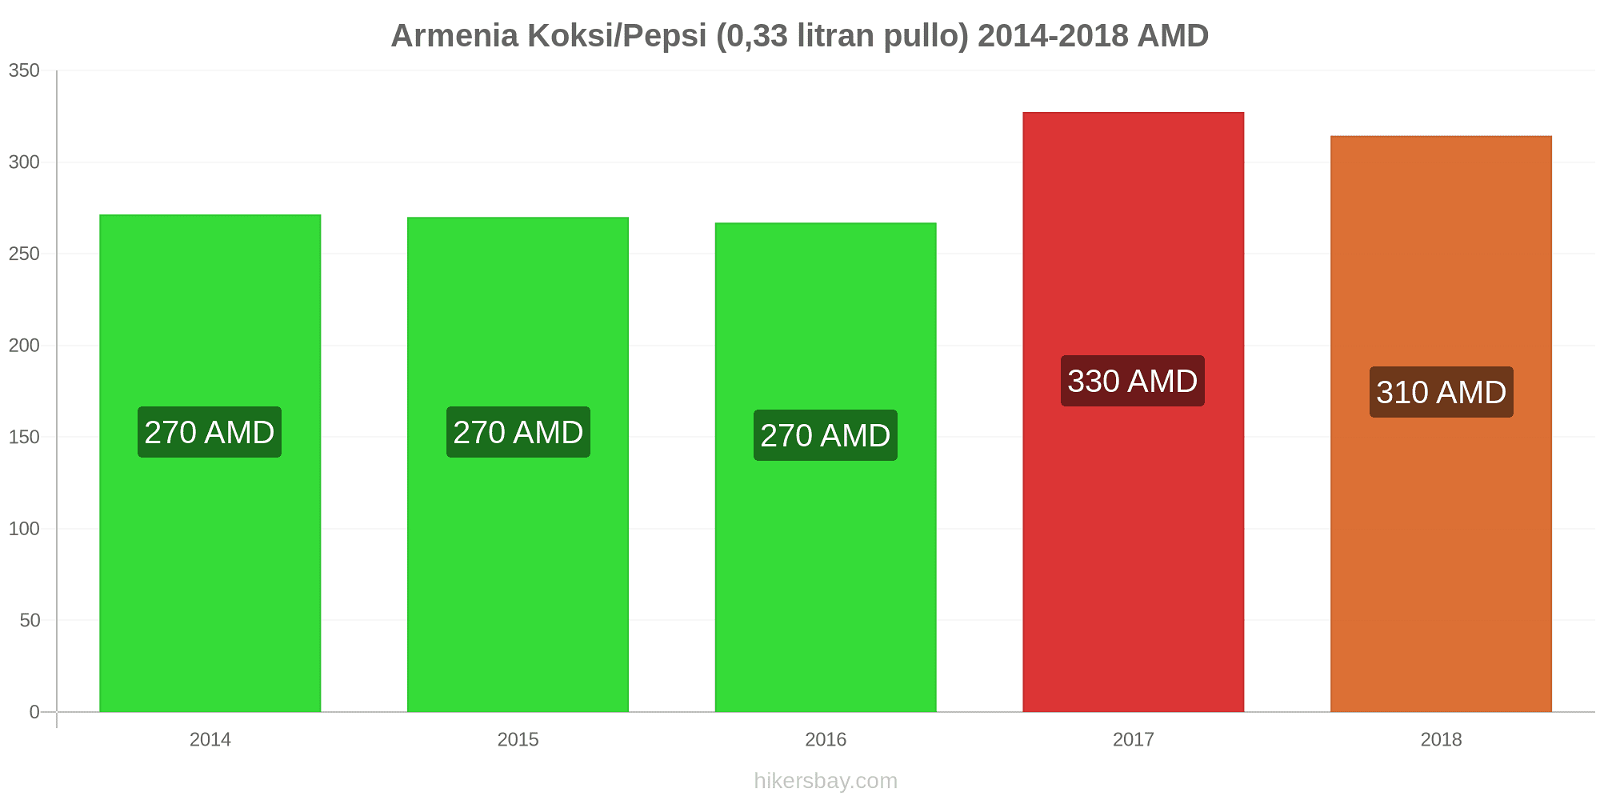 Armenia hintojen muutokset Koksi/Pepsi (0,33 litran pullo) hikersbay.com